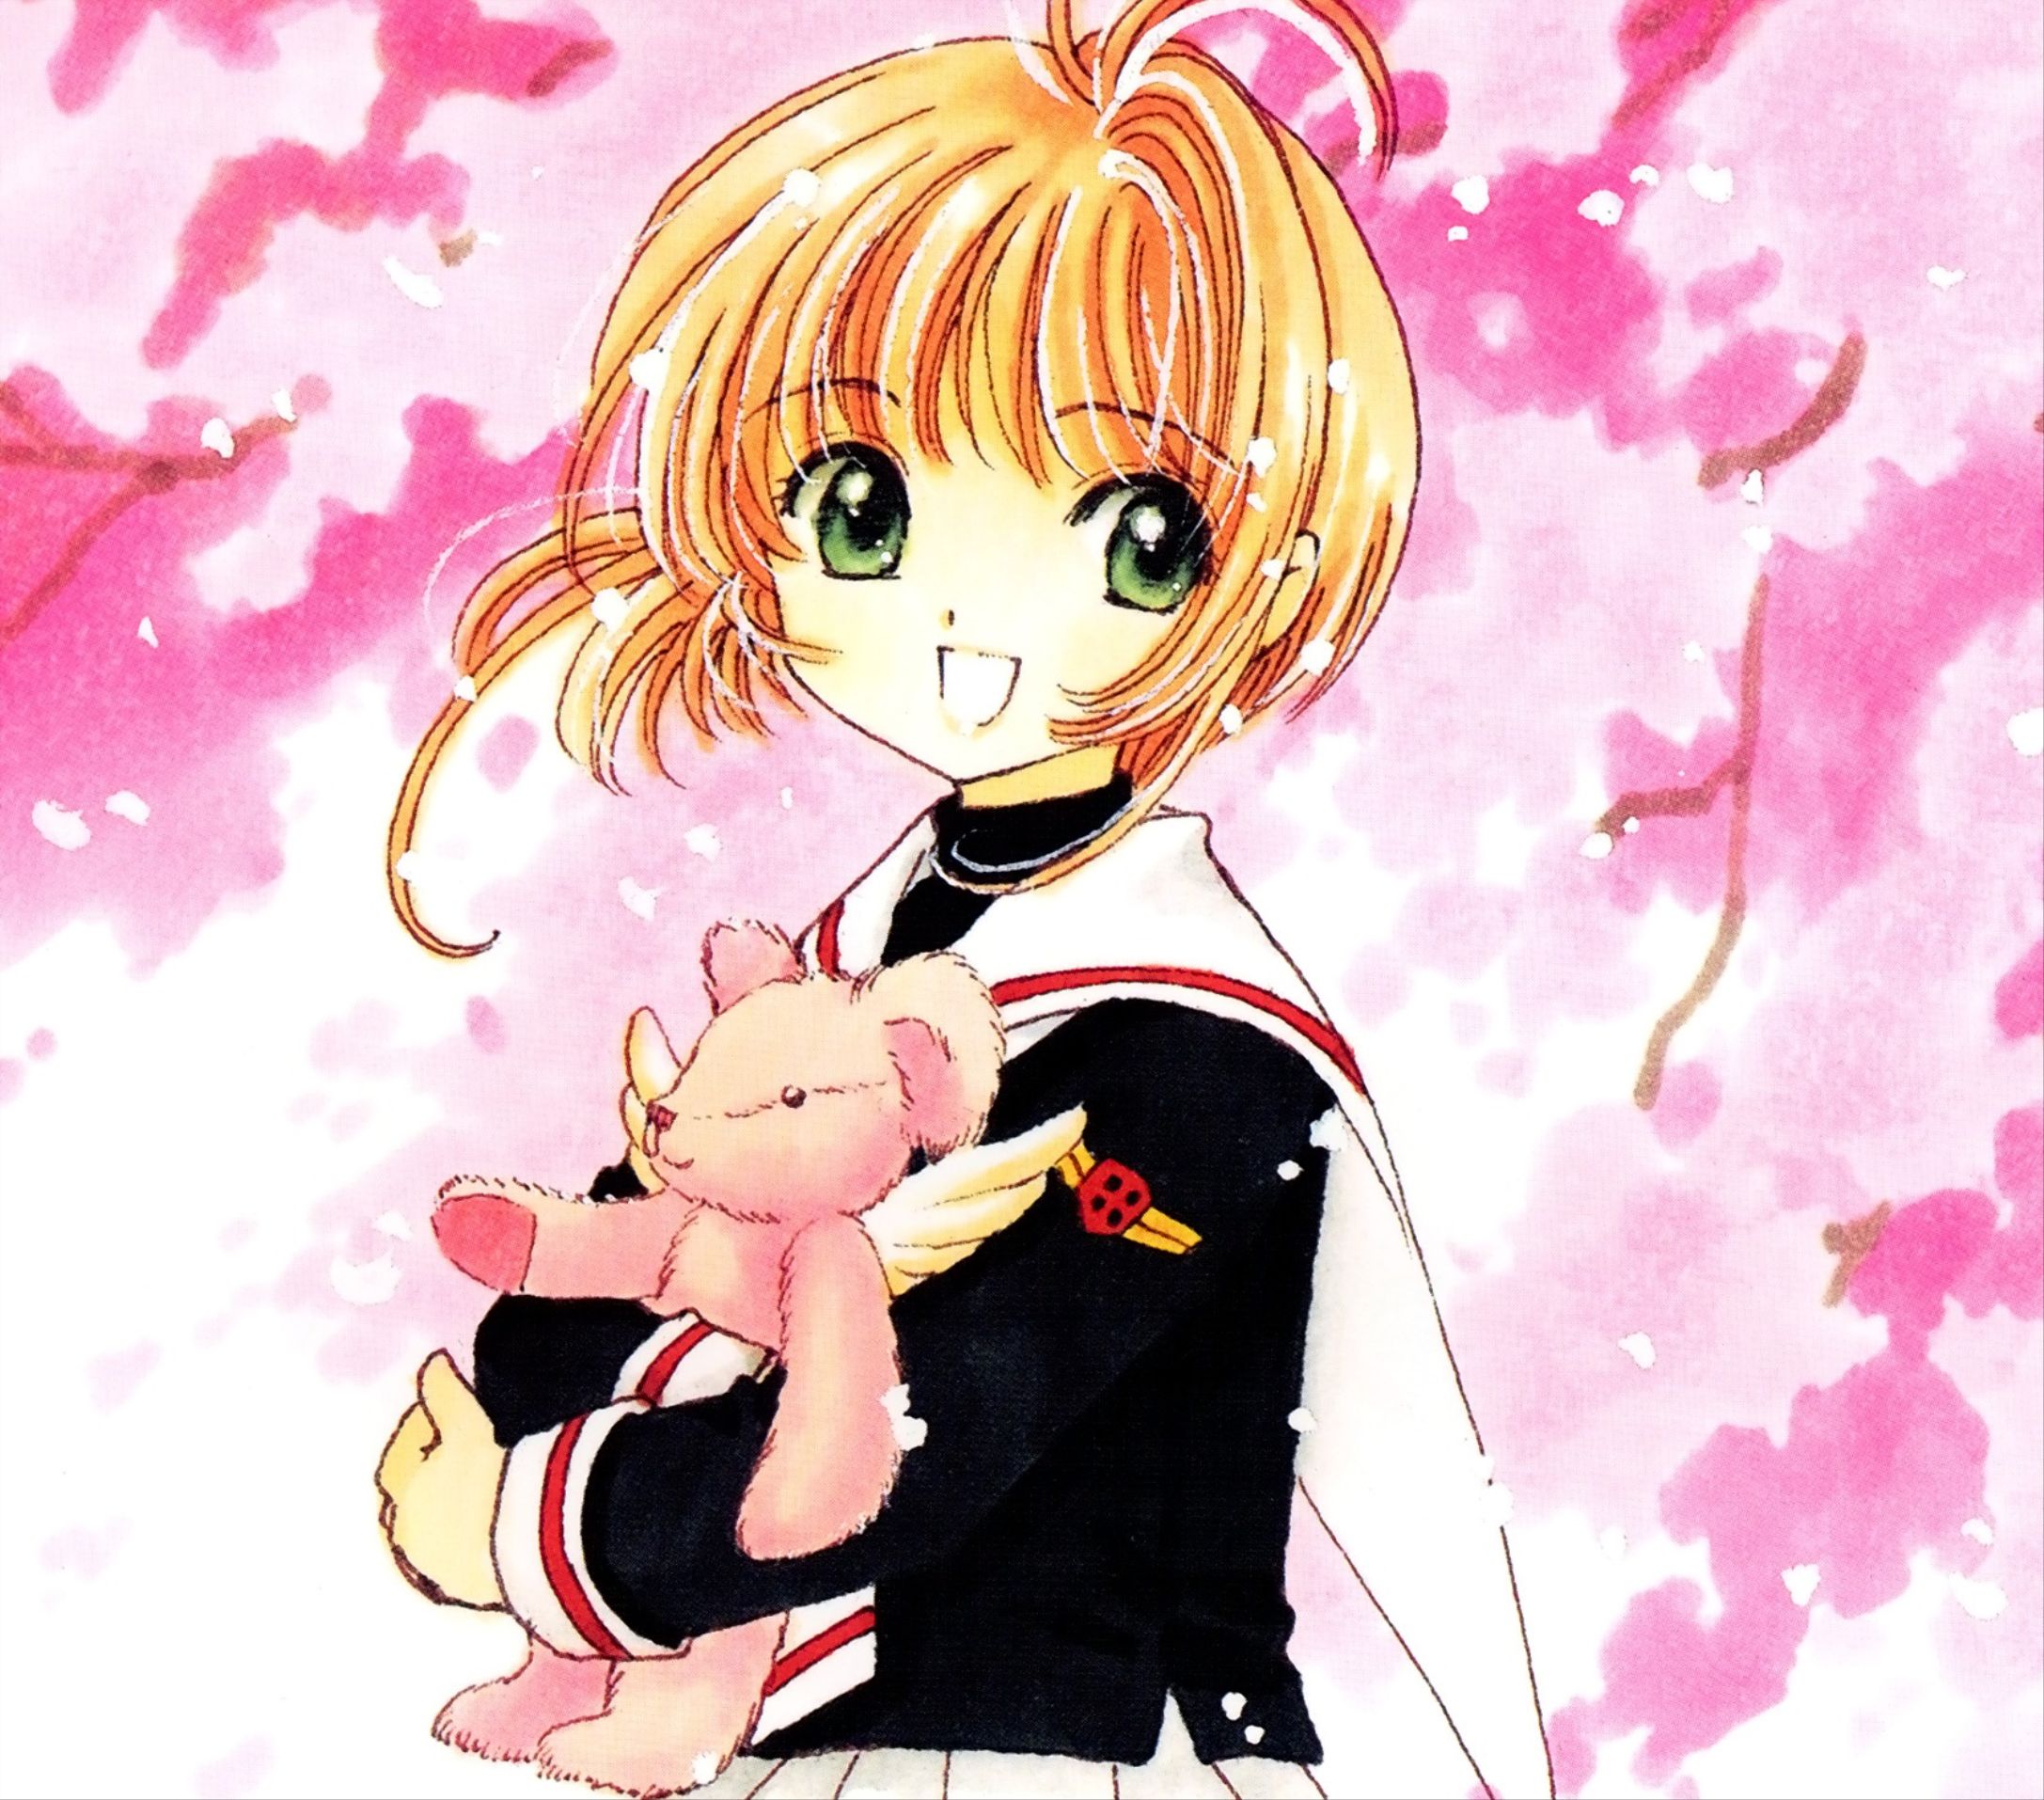 Descarga gratis la imagen Animado, Sakura Cazadora De Cartas, Sakura Kinomoto en el escritorio de tu PC